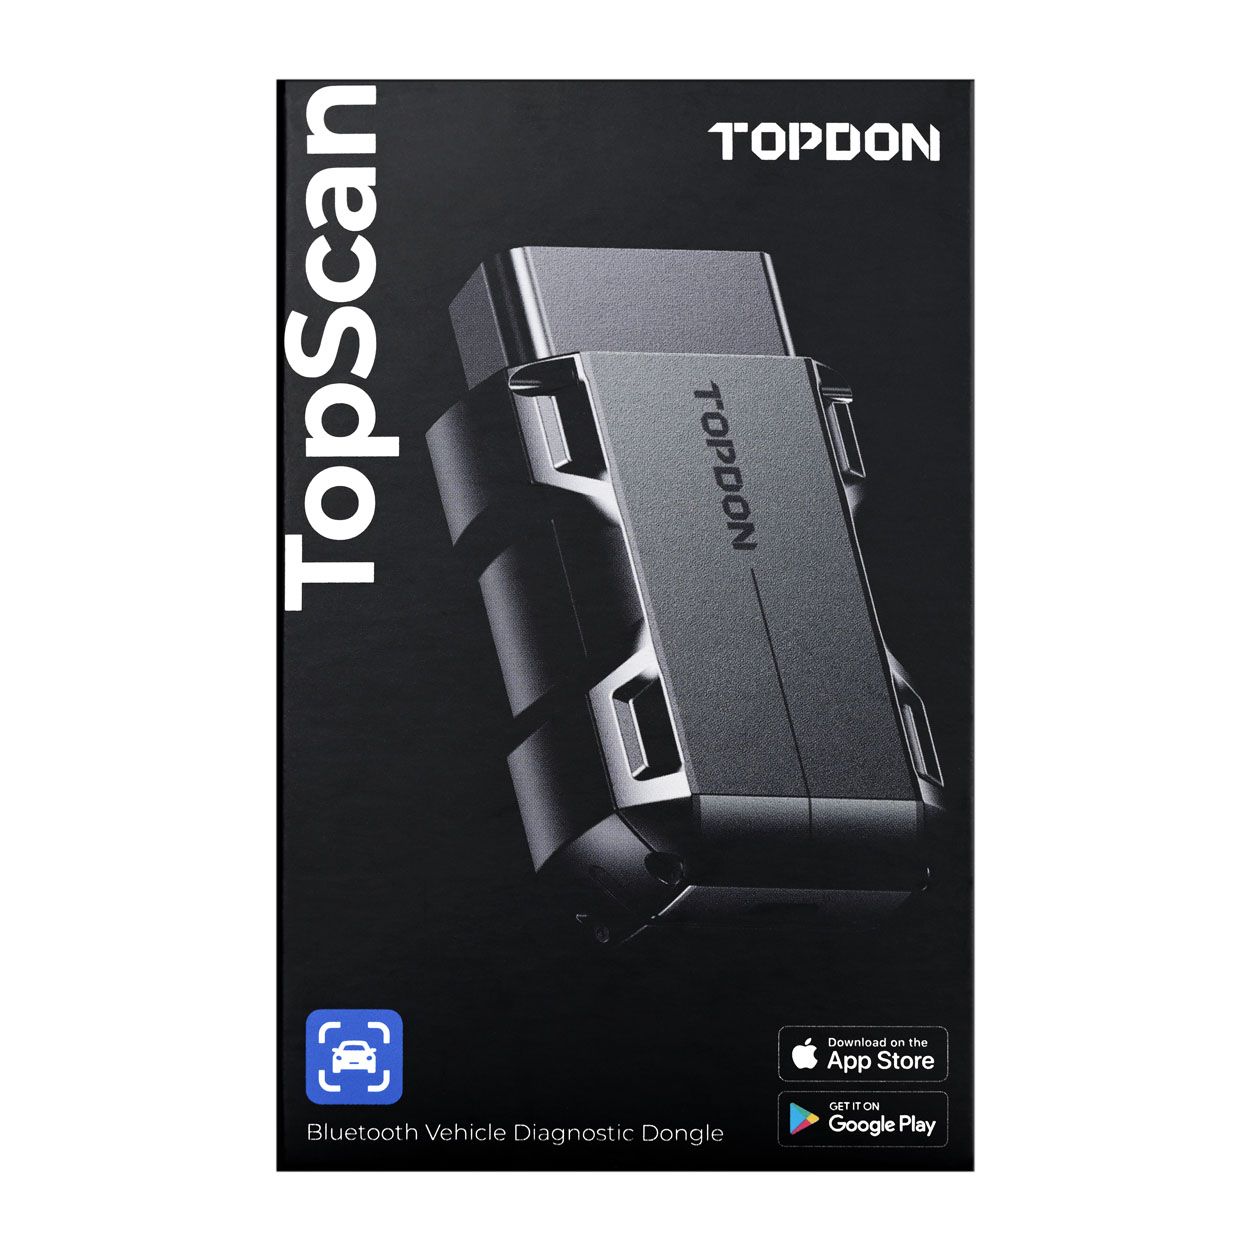 TOPDON TopScan, Unboxing, Diagnostic Tool